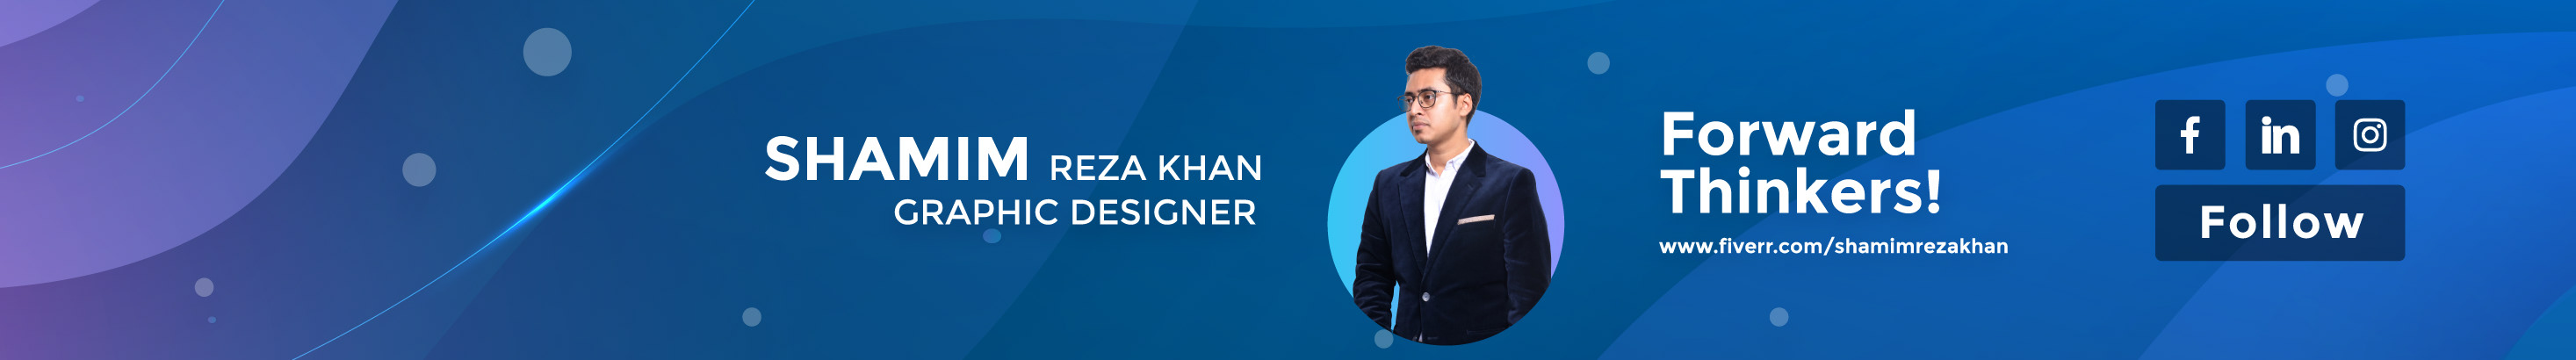 Shamim Reza Khan's profile banner